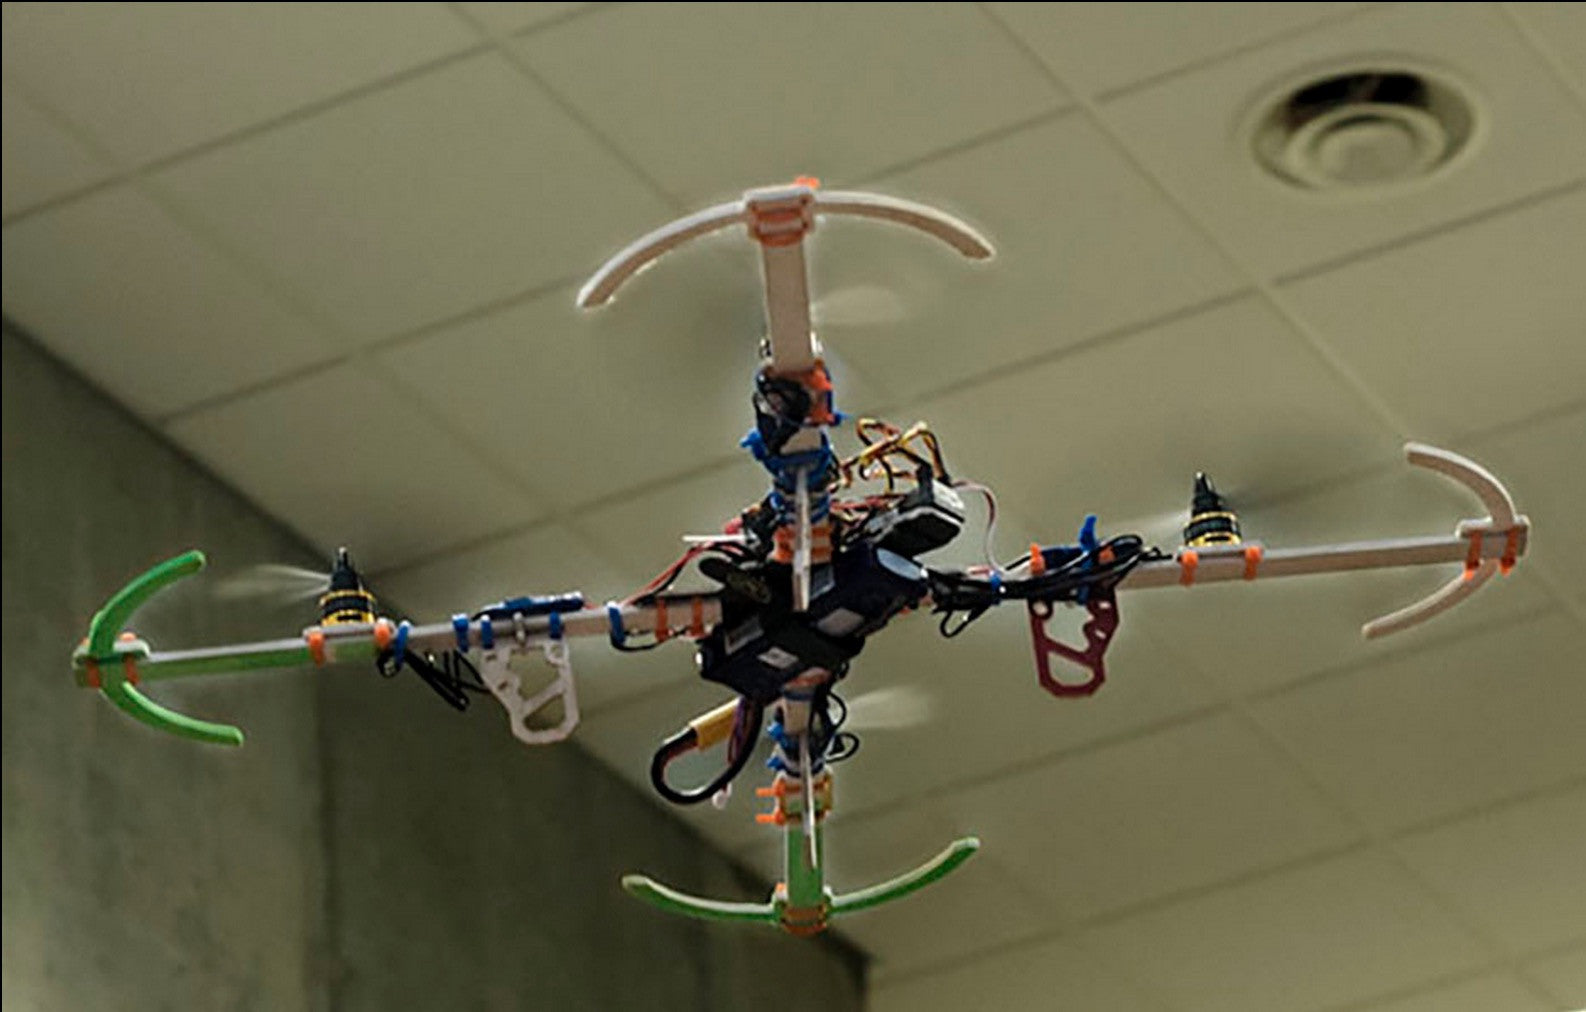 Droneworkshop for bedrifter